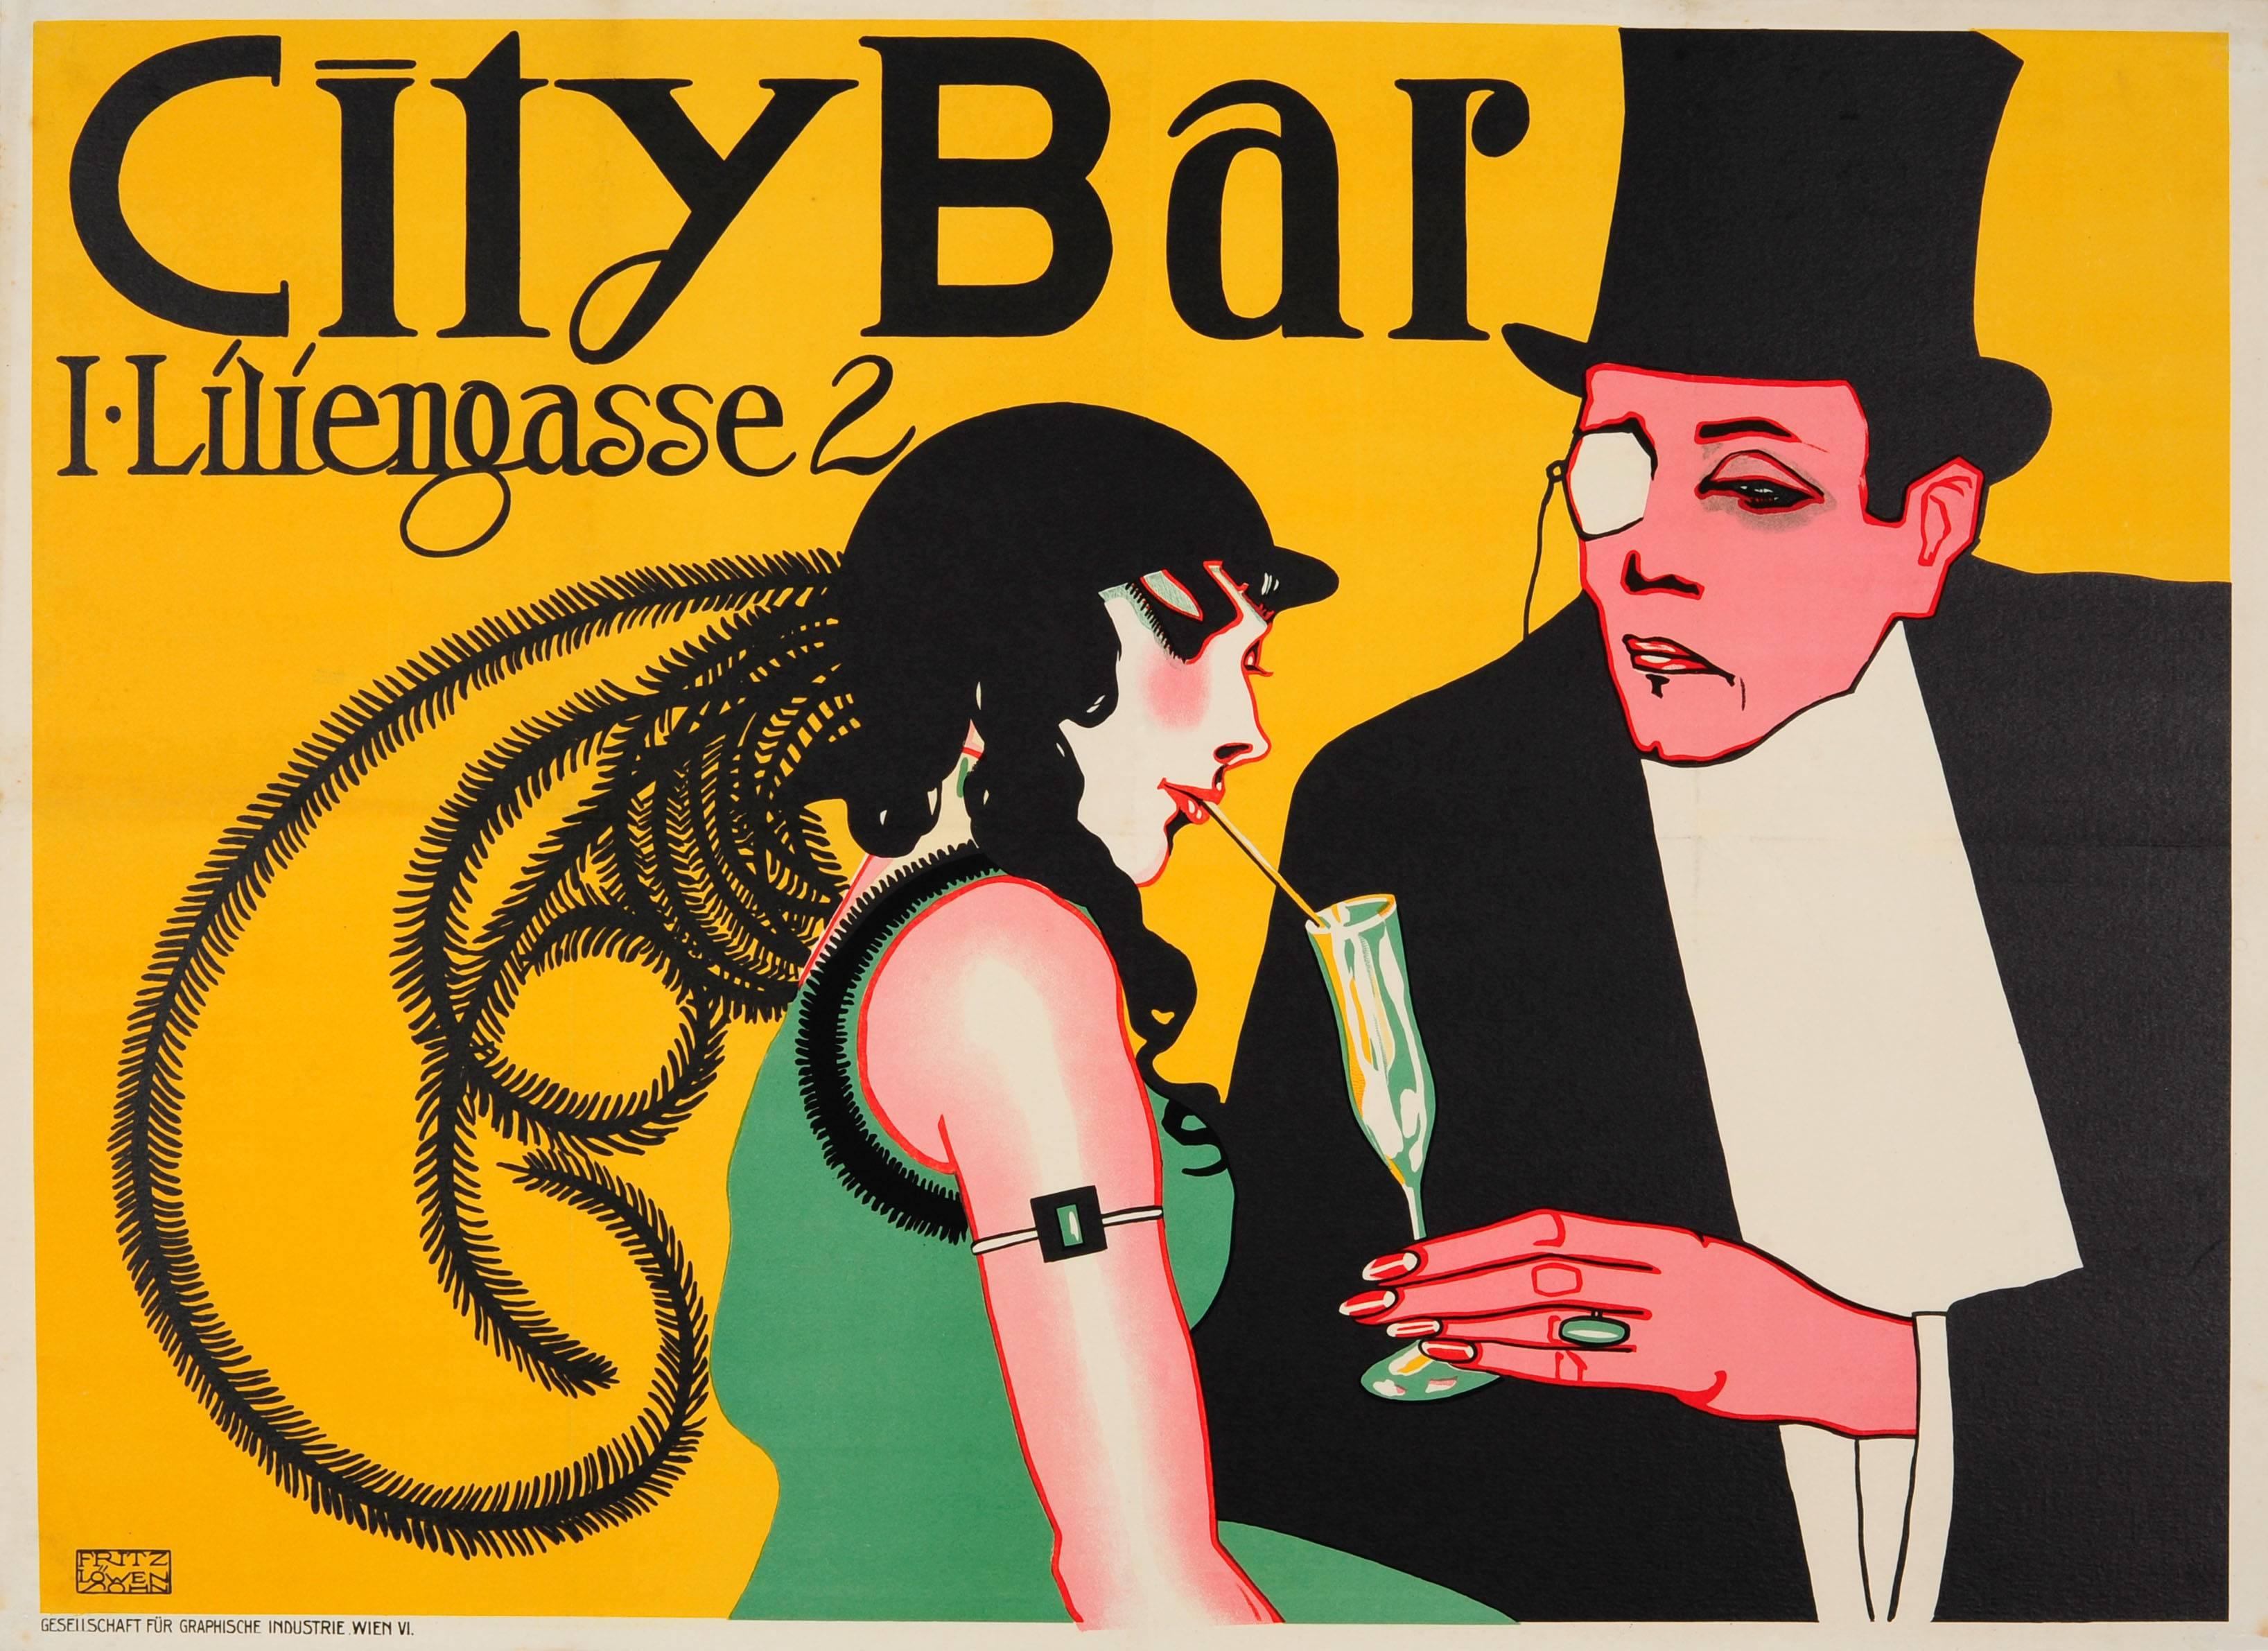 Fritz Lovensohn Print - Original Vienna Secessionism Design Poster For City Bar - Now Eden Bar - Austria